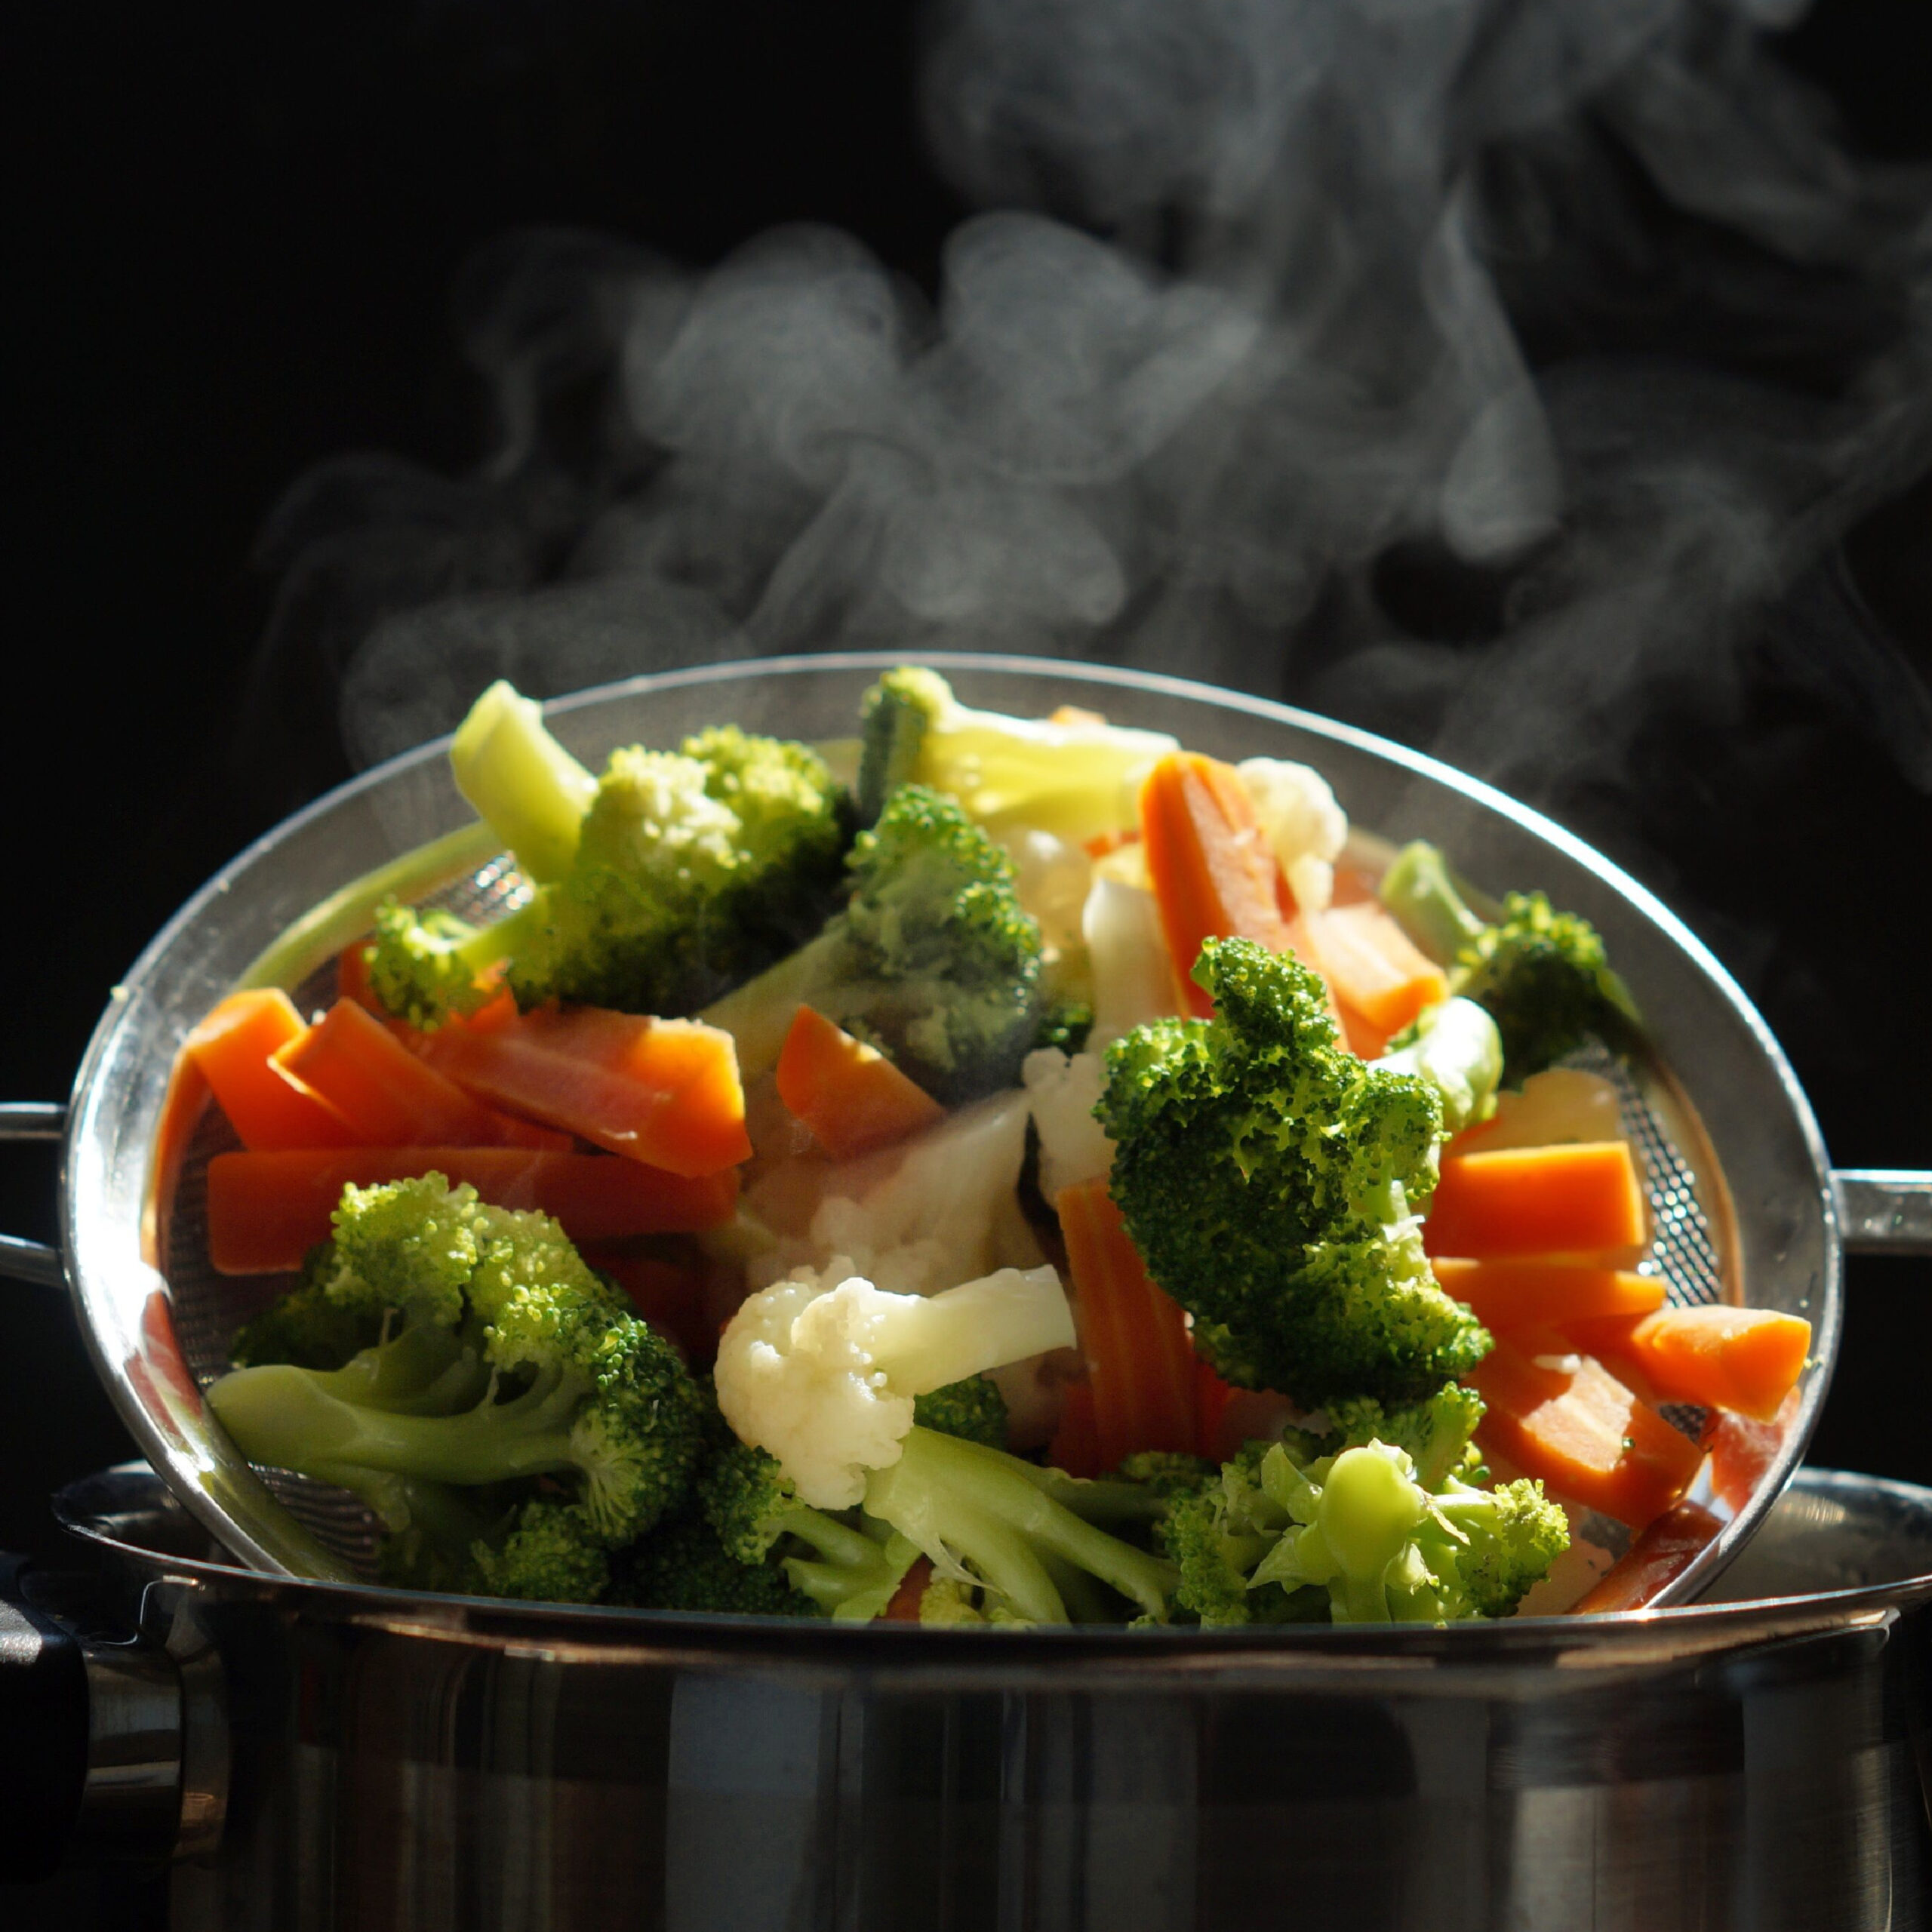 Steaming Vegetables